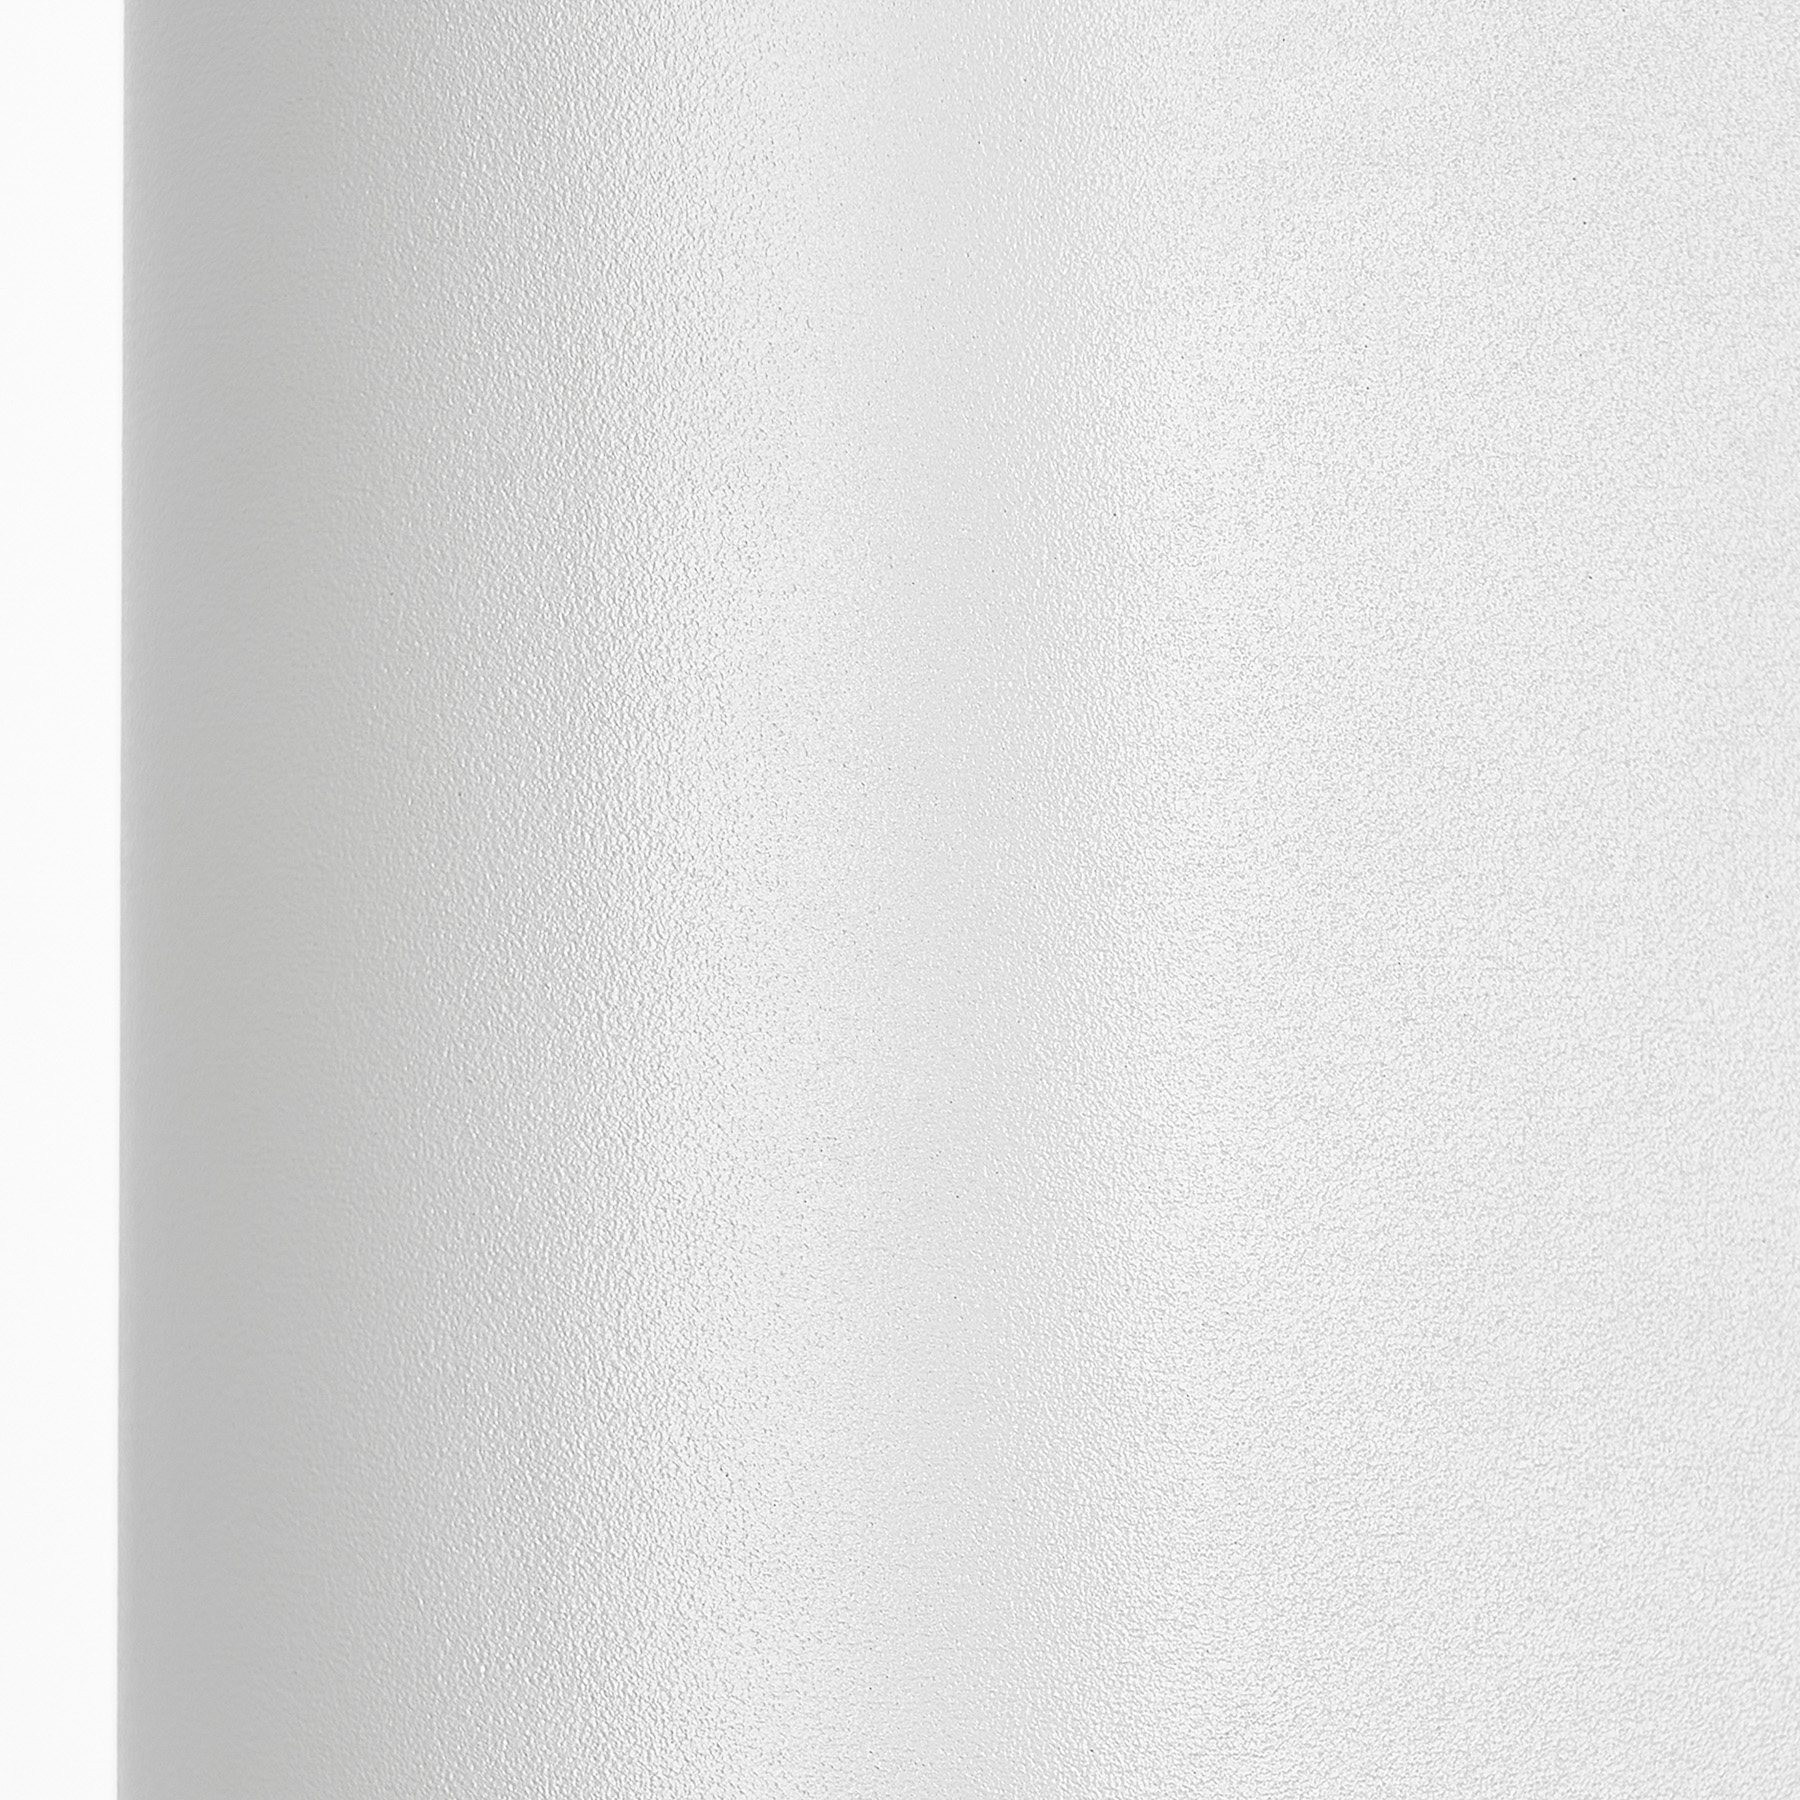 Prios outdoor wall light Tetje, white, round, 16 cm, set of 4